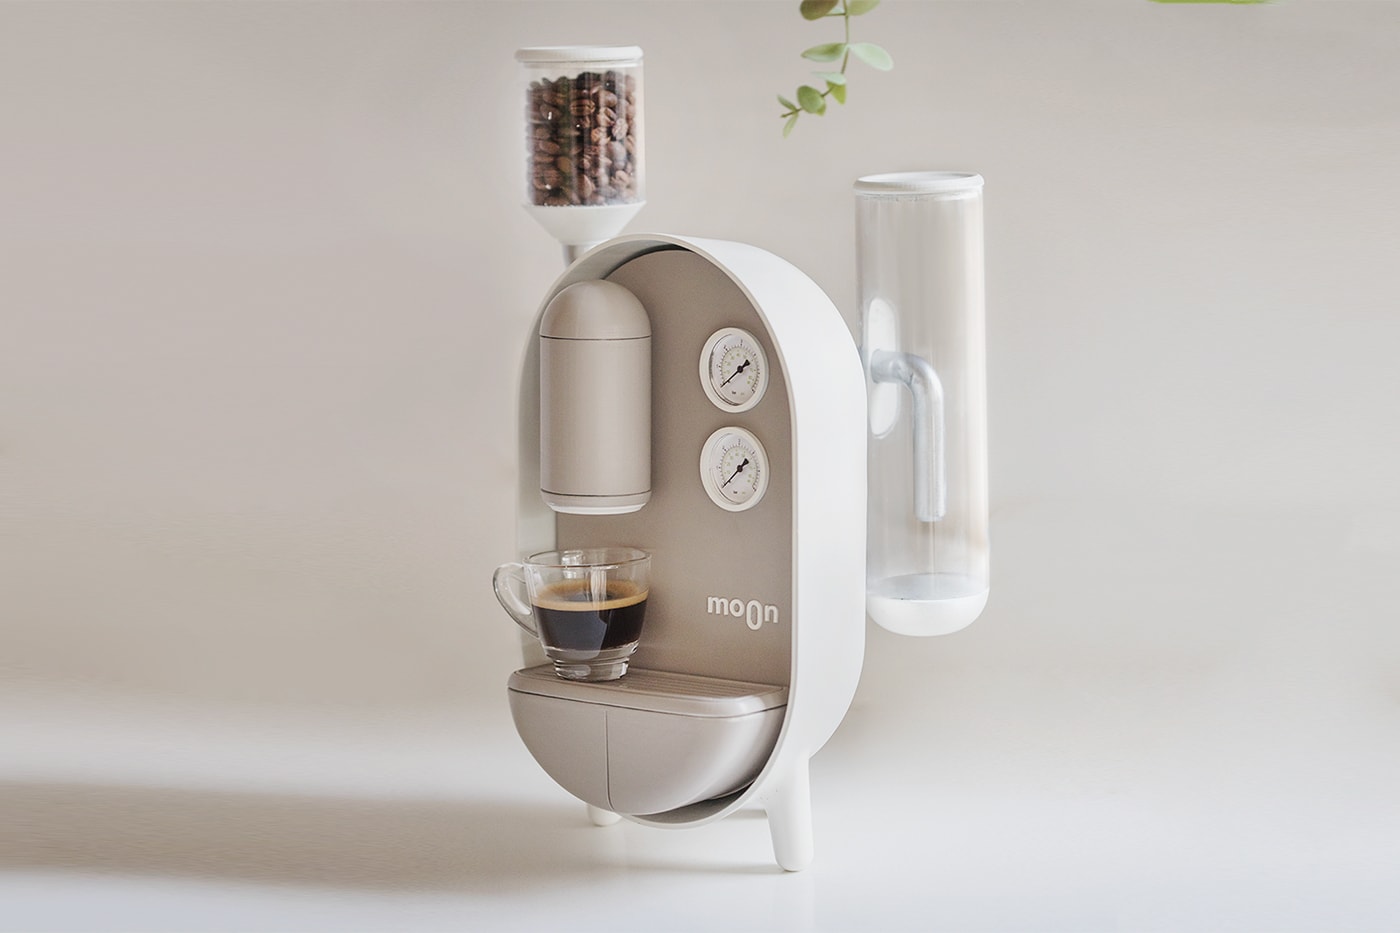 moon coffee maker machine minimalist roee ben yehuda espresso home design appliances